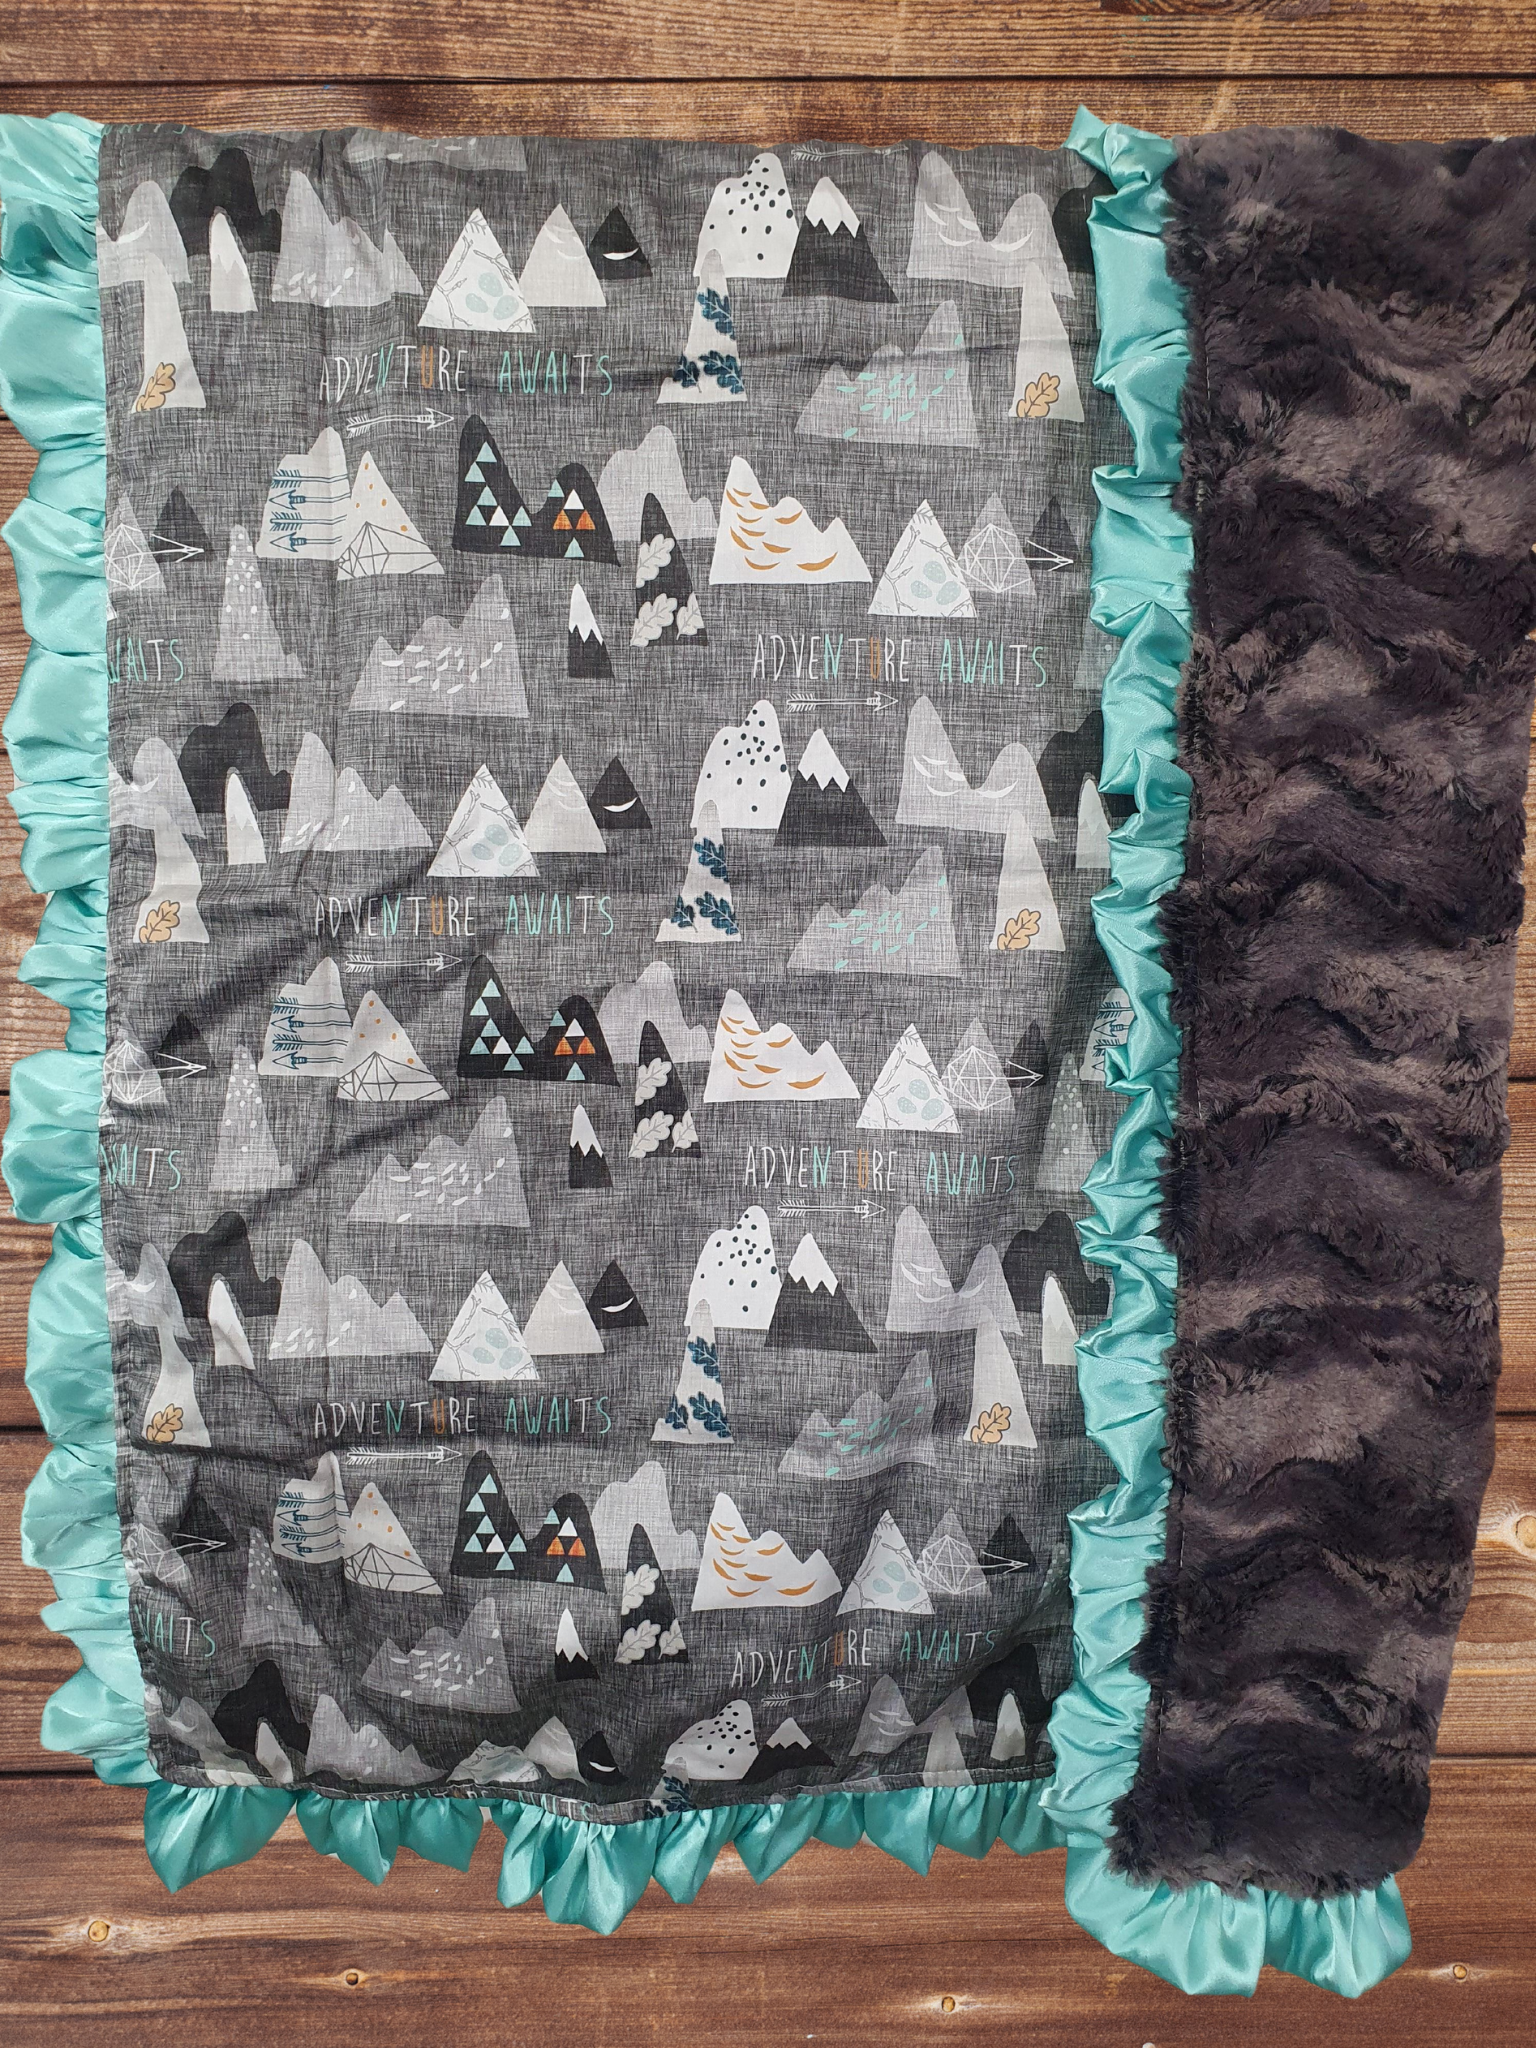 Baby Ruffle Blanket - Adventure Awaits Mountains Woodland Blanket - DBC Baby Bedding Co 